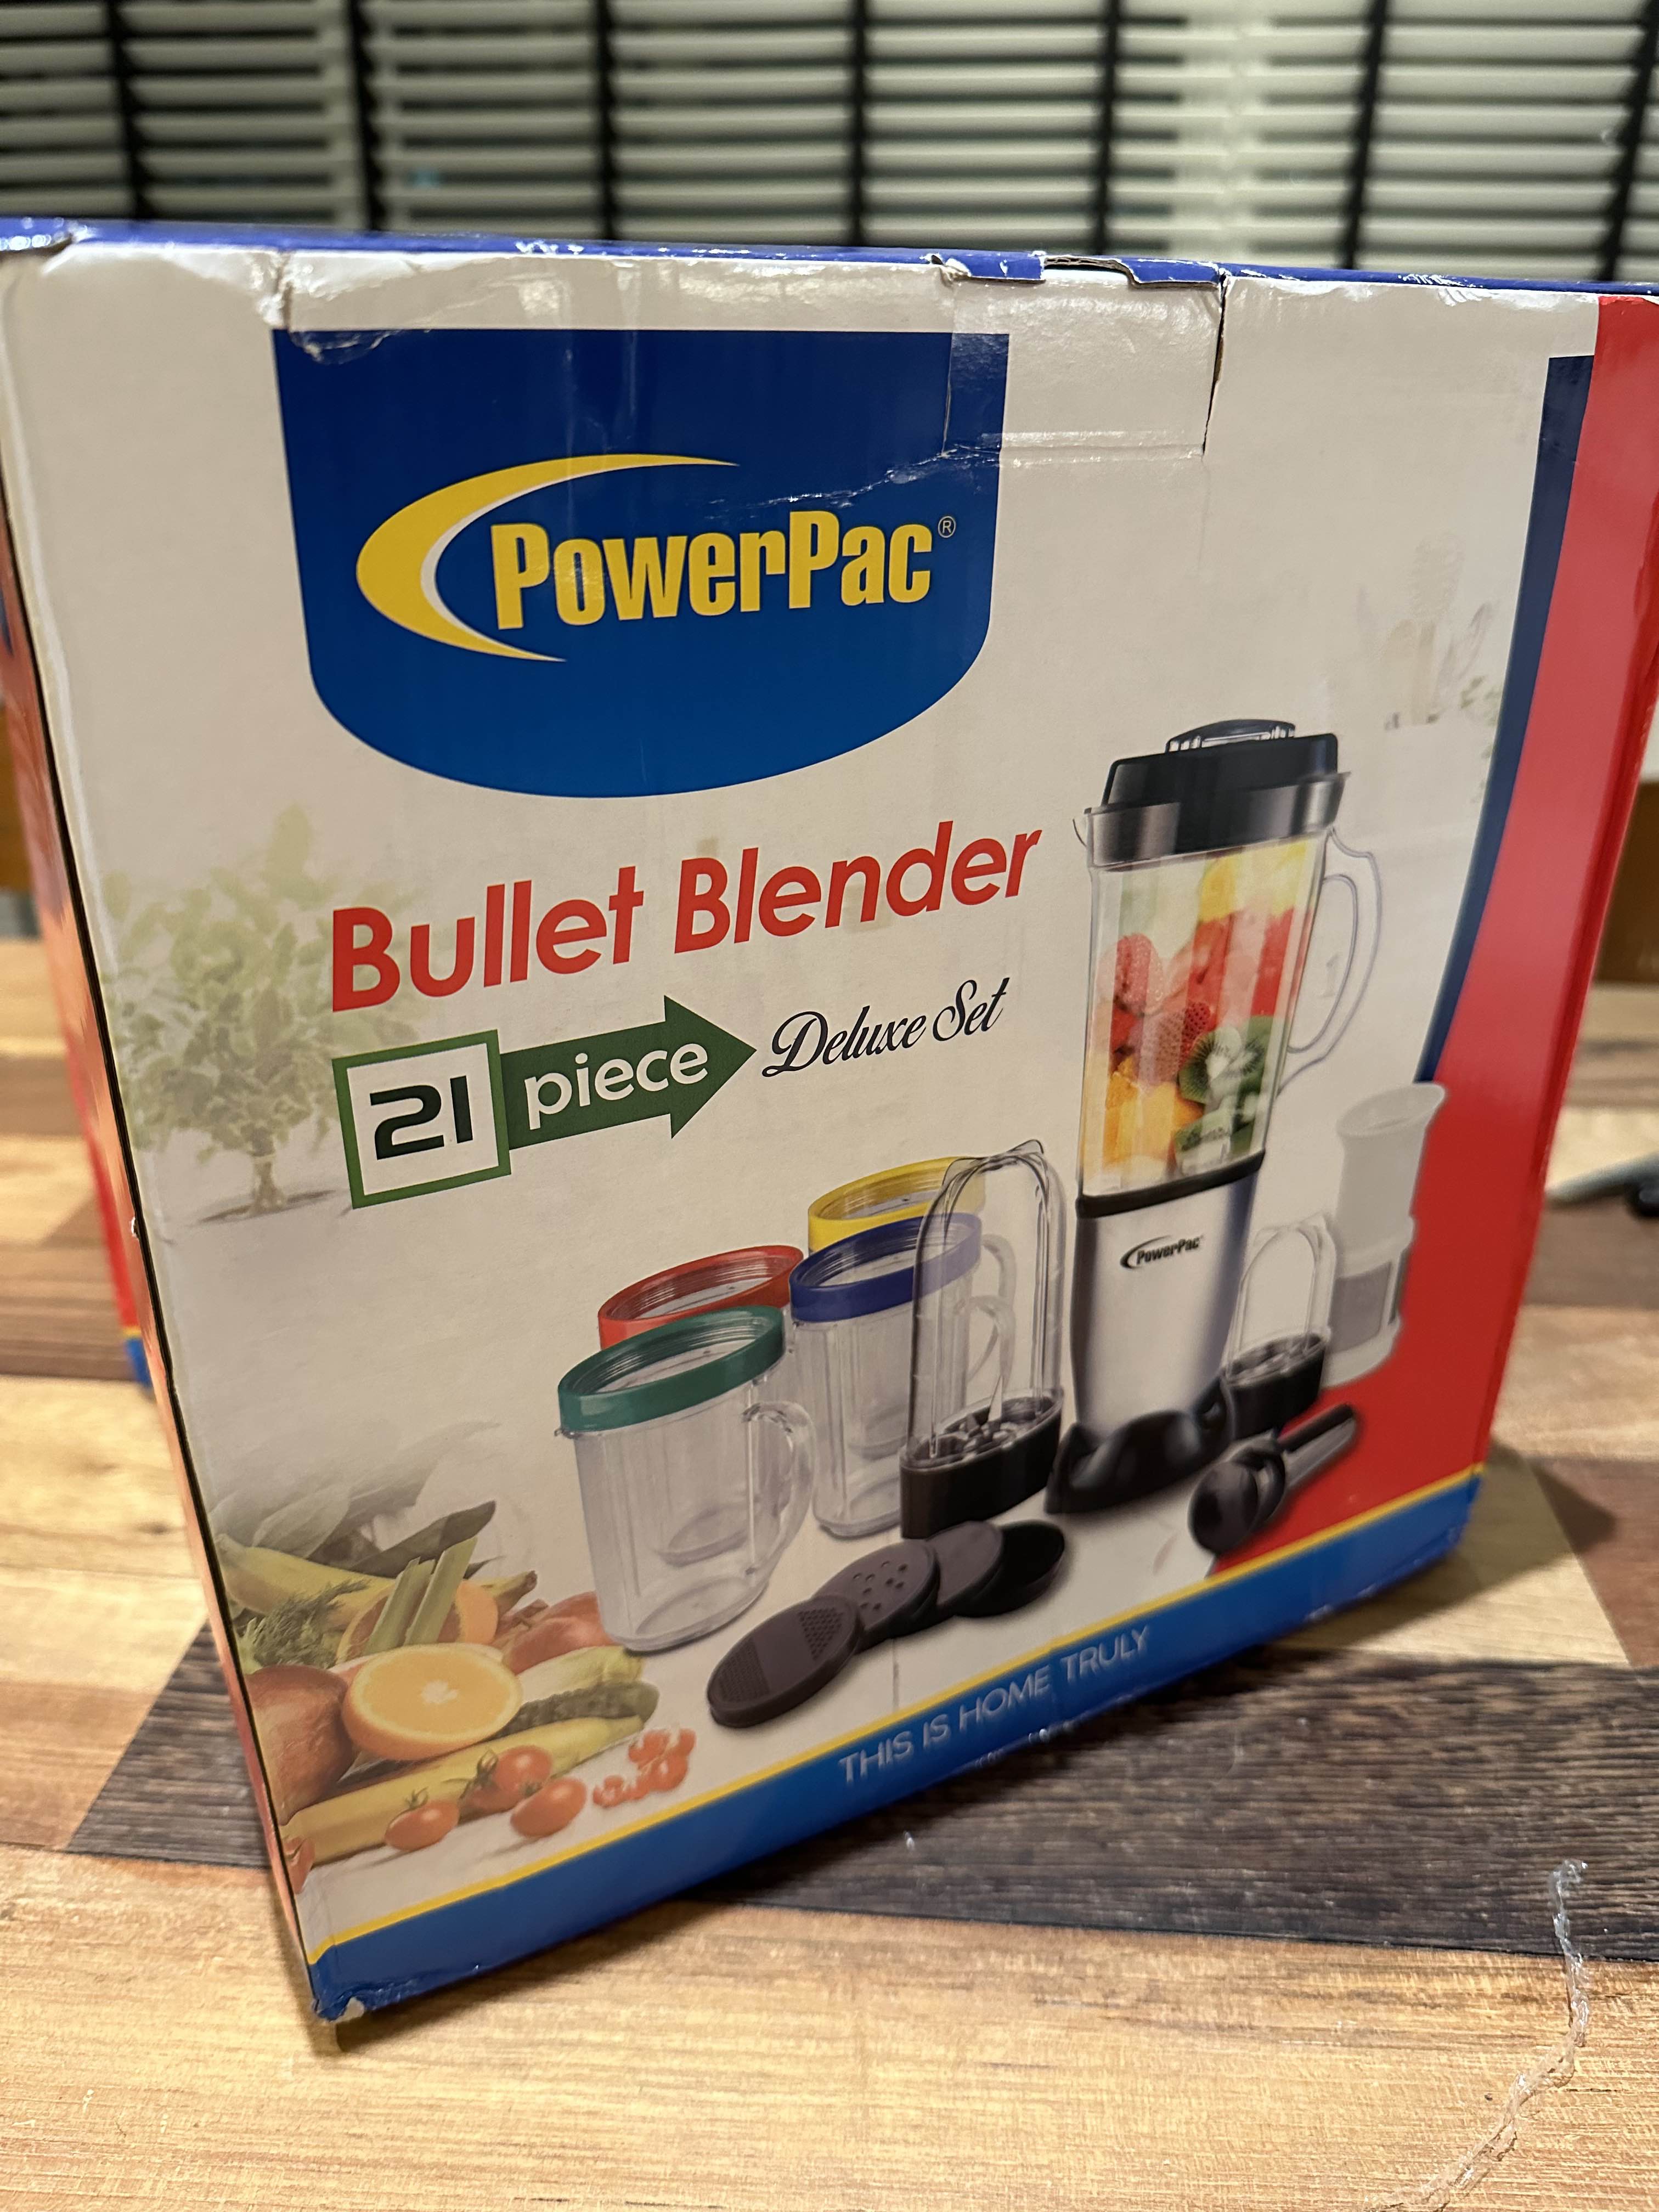 21 Piece Bullet Blender (PPBL321) - PowerPacSG